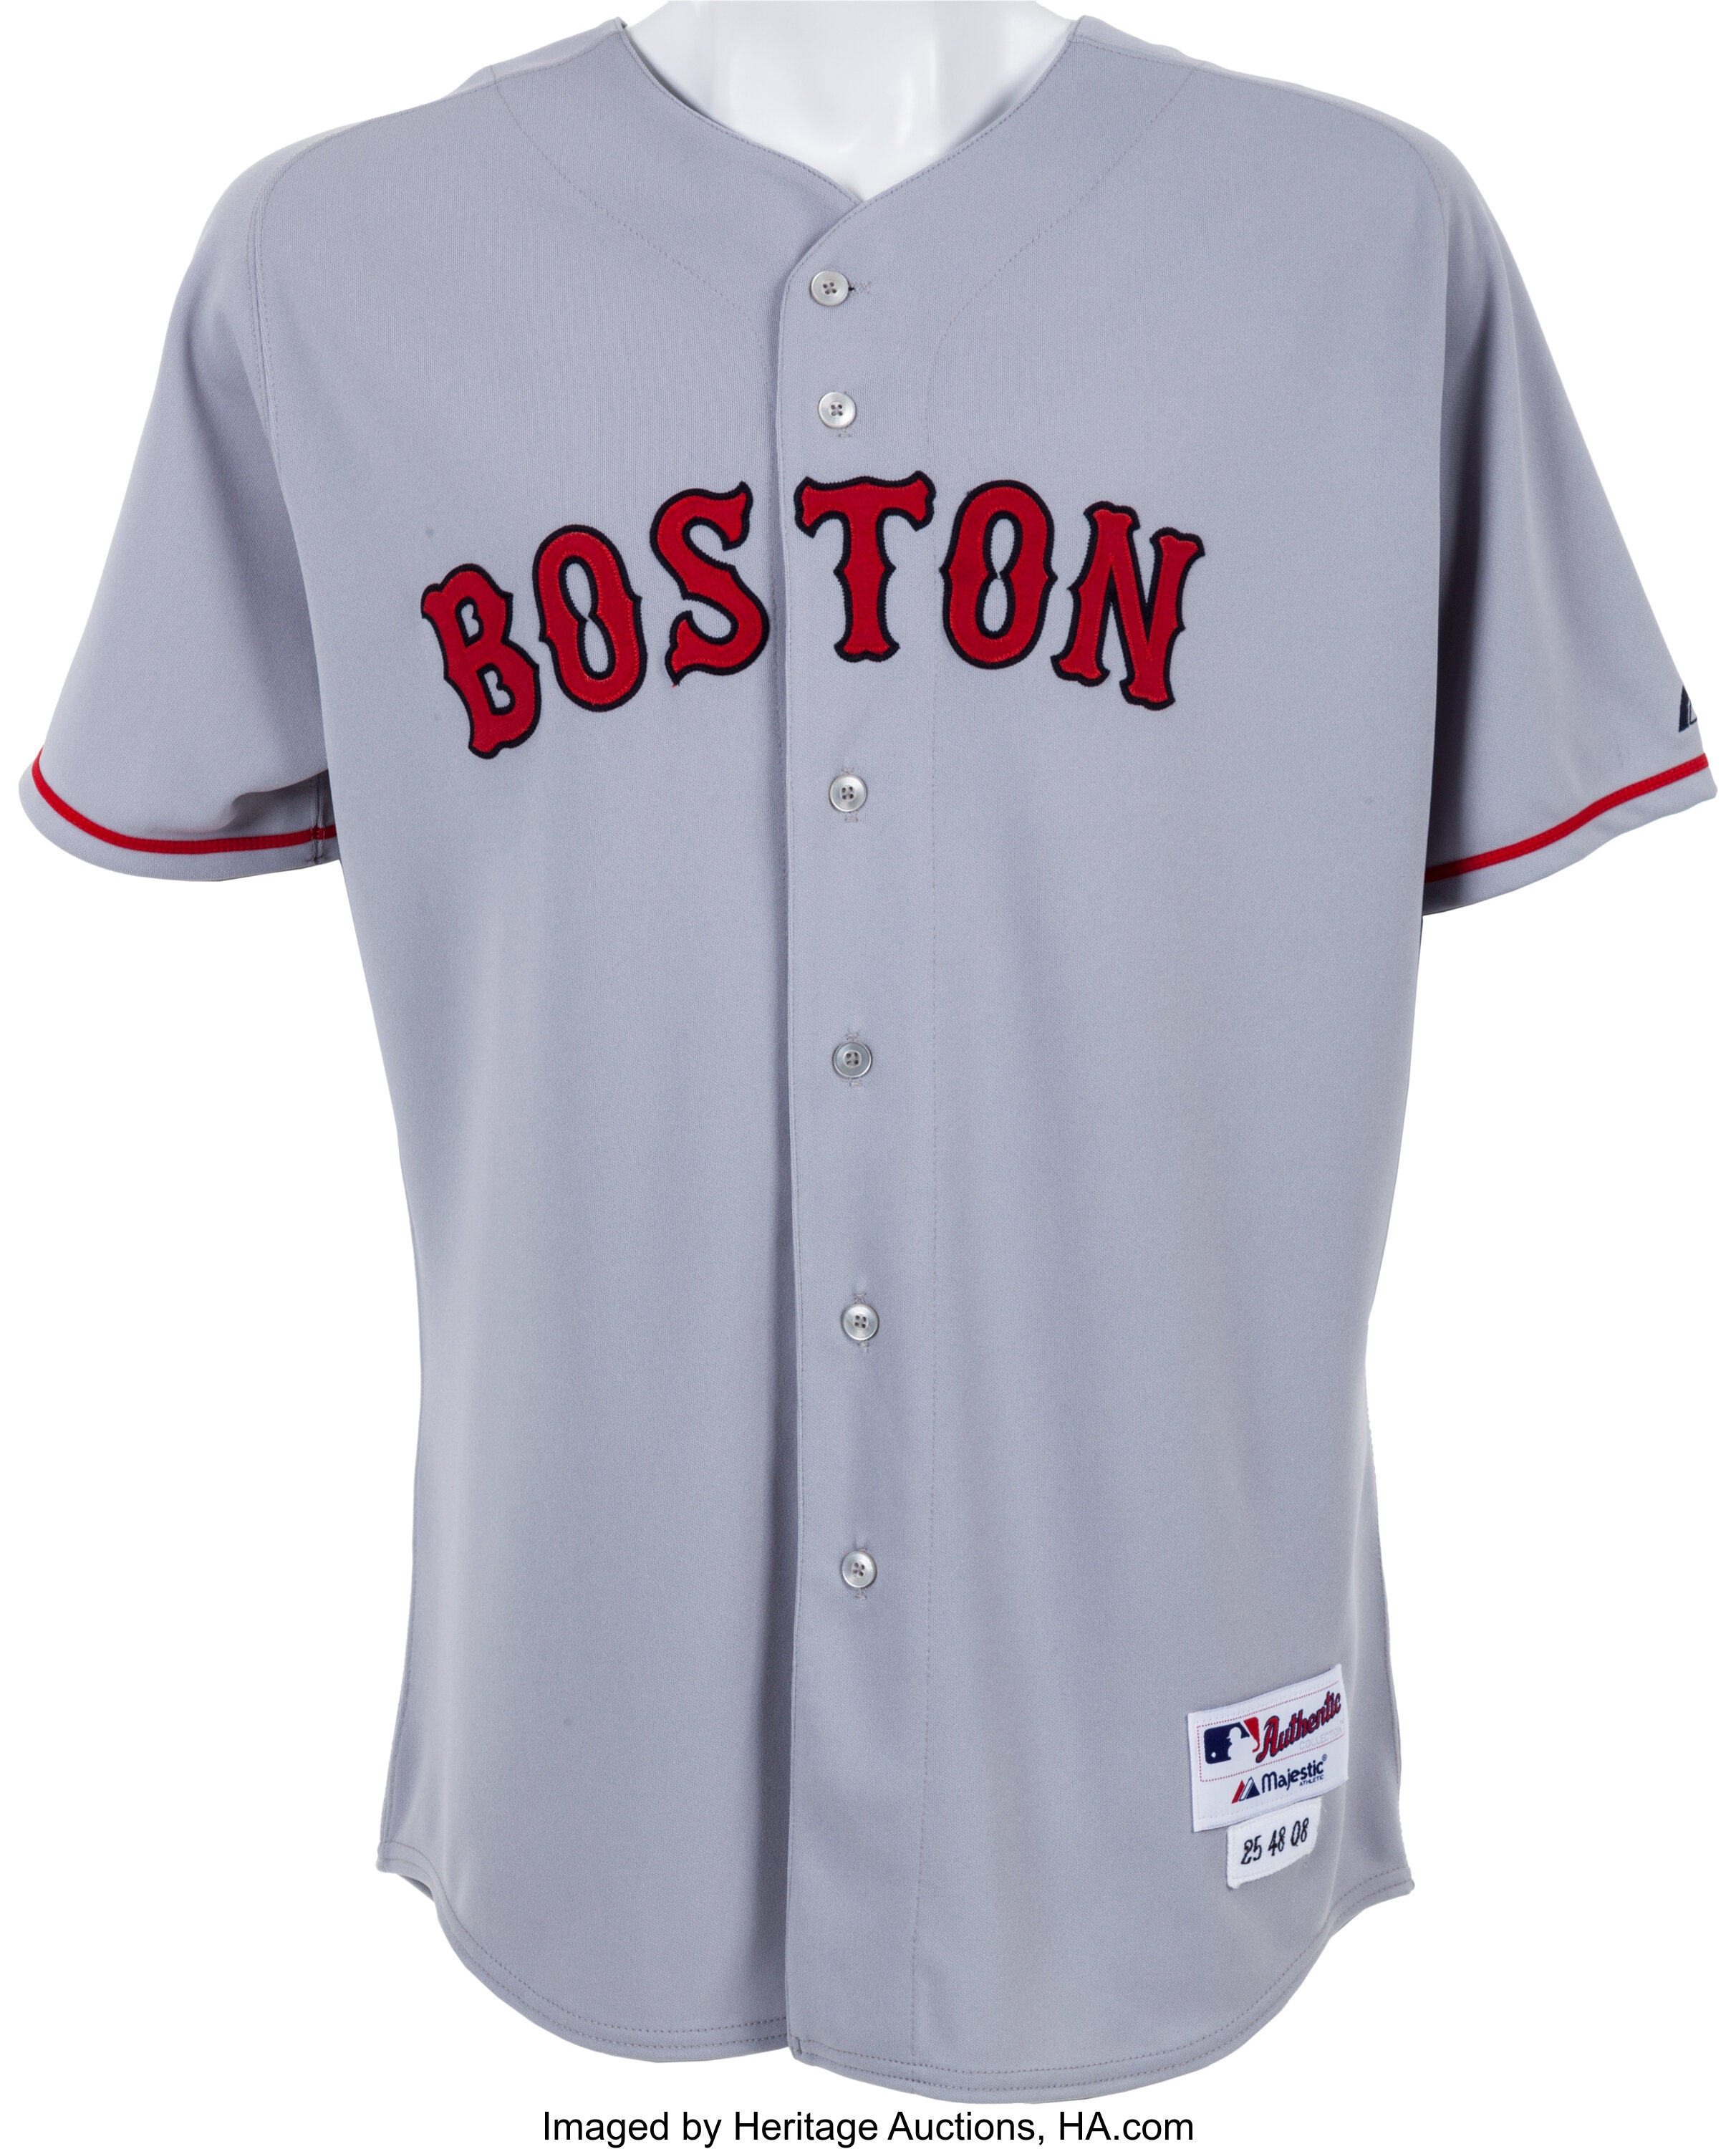 2007 World Series Boston Red Sox Championship Tee